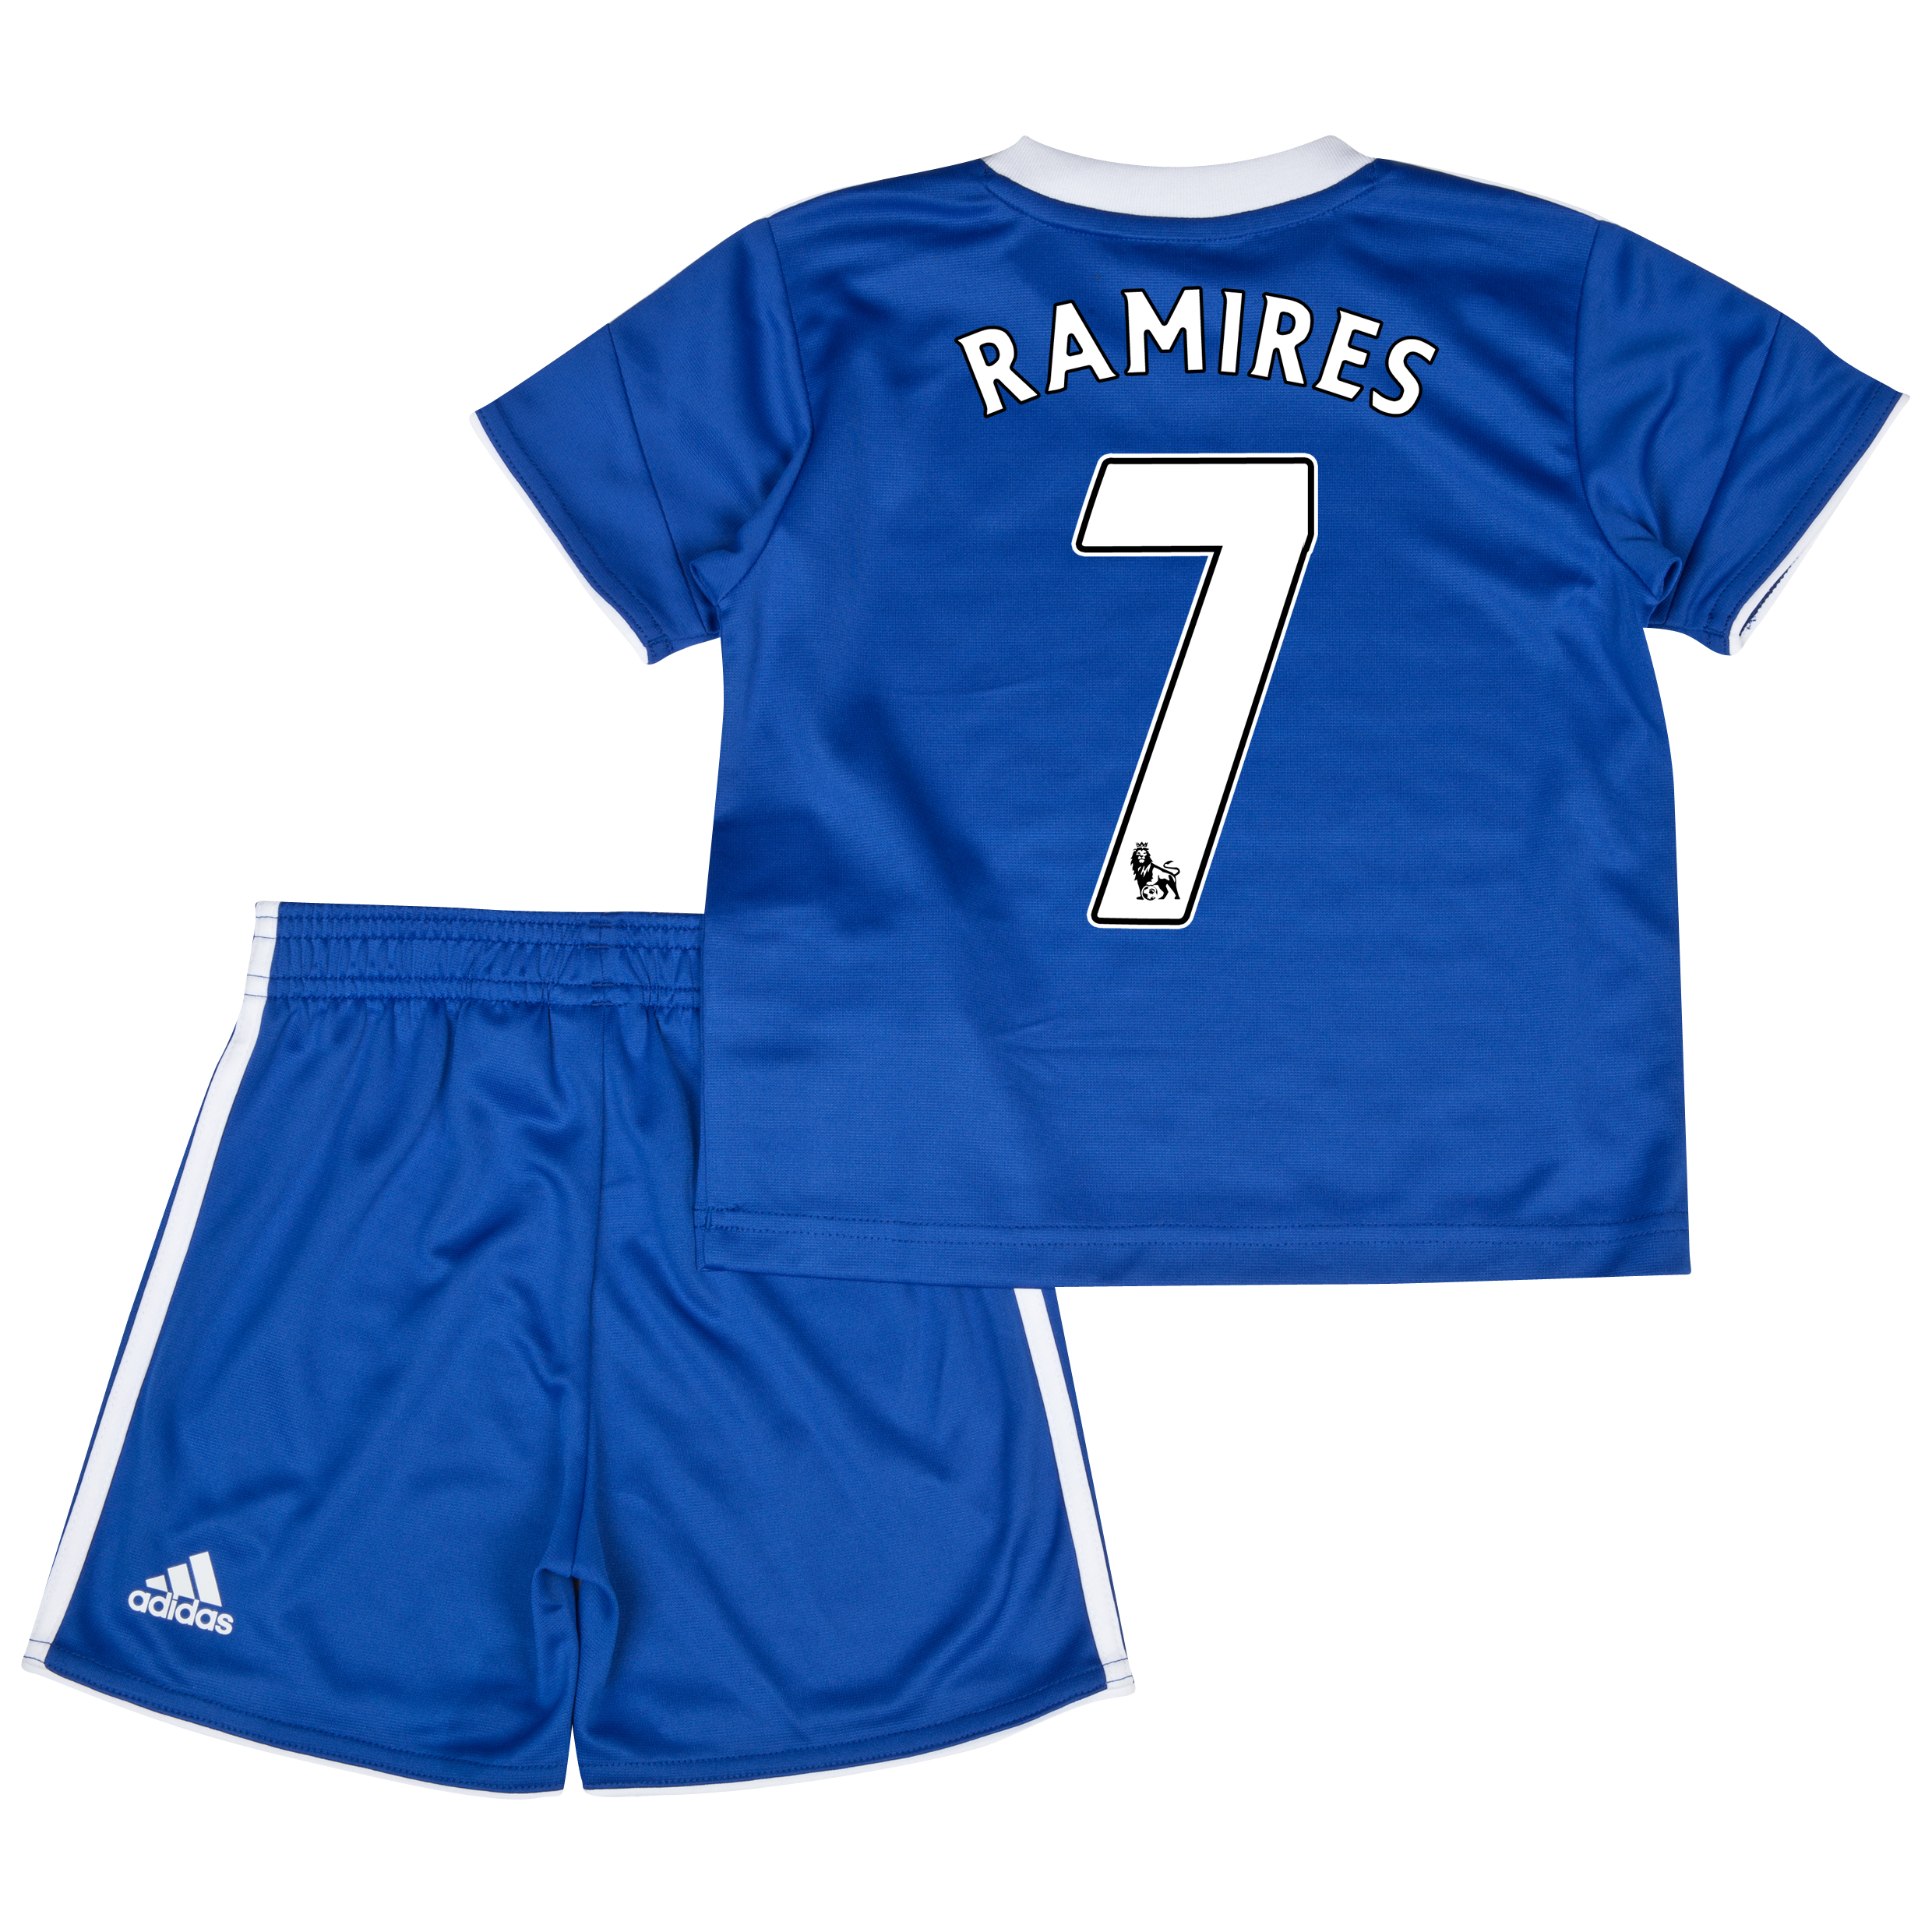 Chelsea Home Mini Kit 2013/14 with Ramires 7 printing